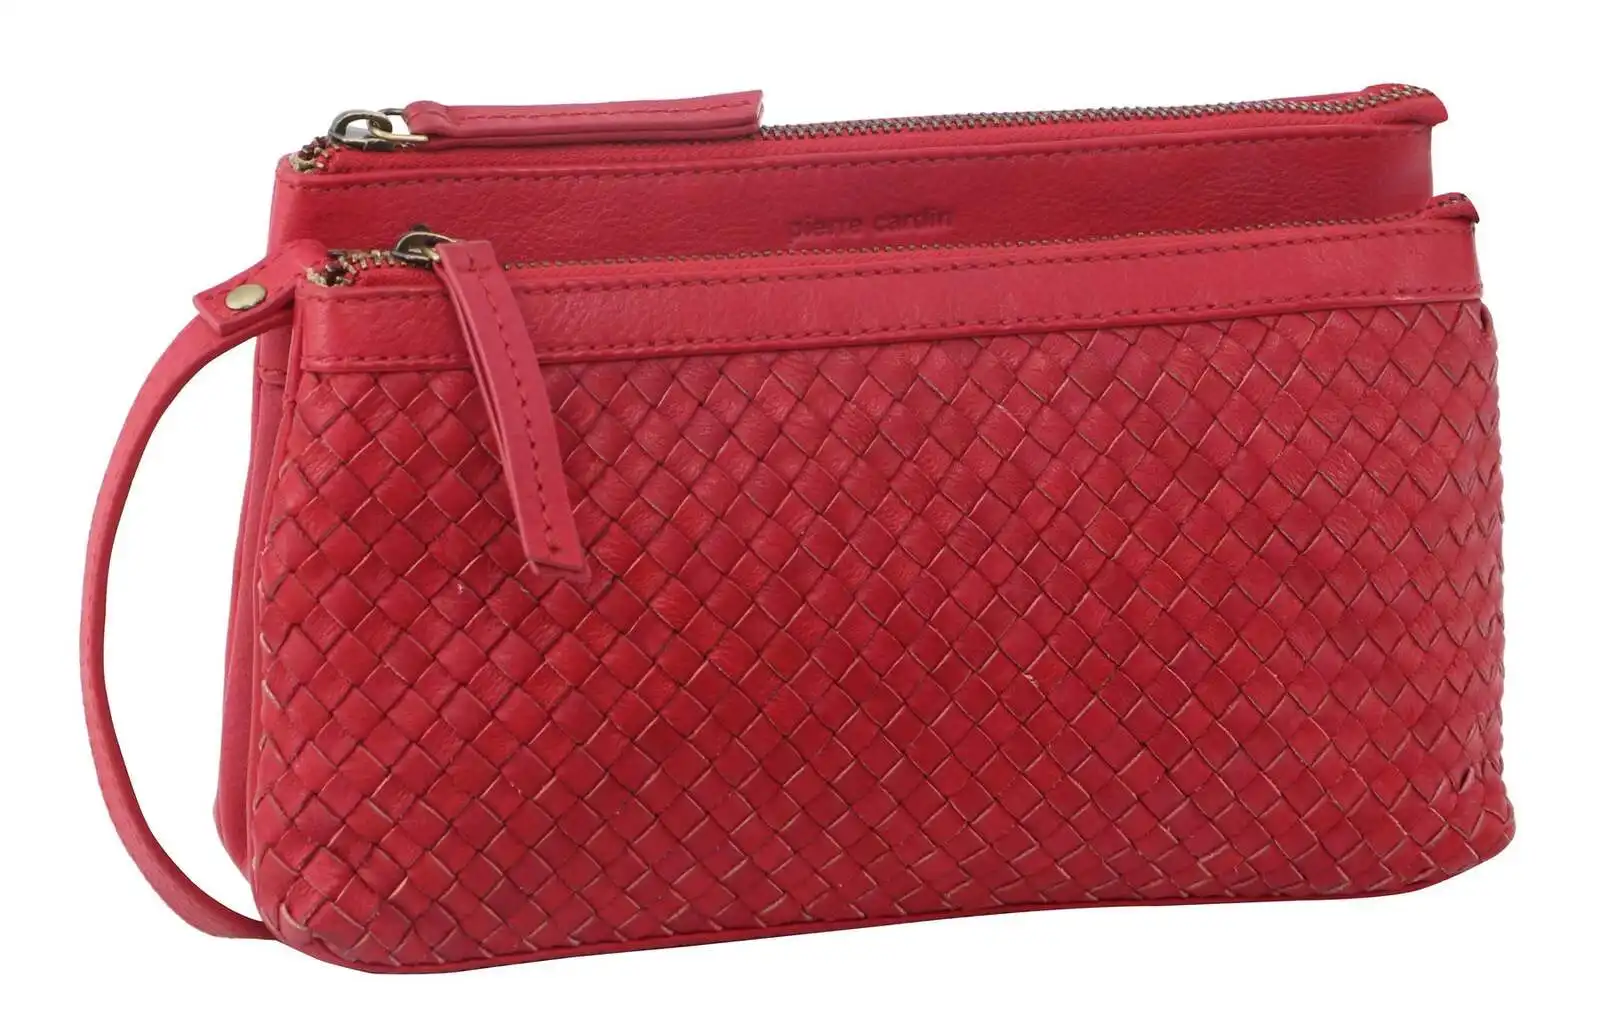 Pierre Cardin Woven Ladies Crossbody/ Clutch Bag - Red